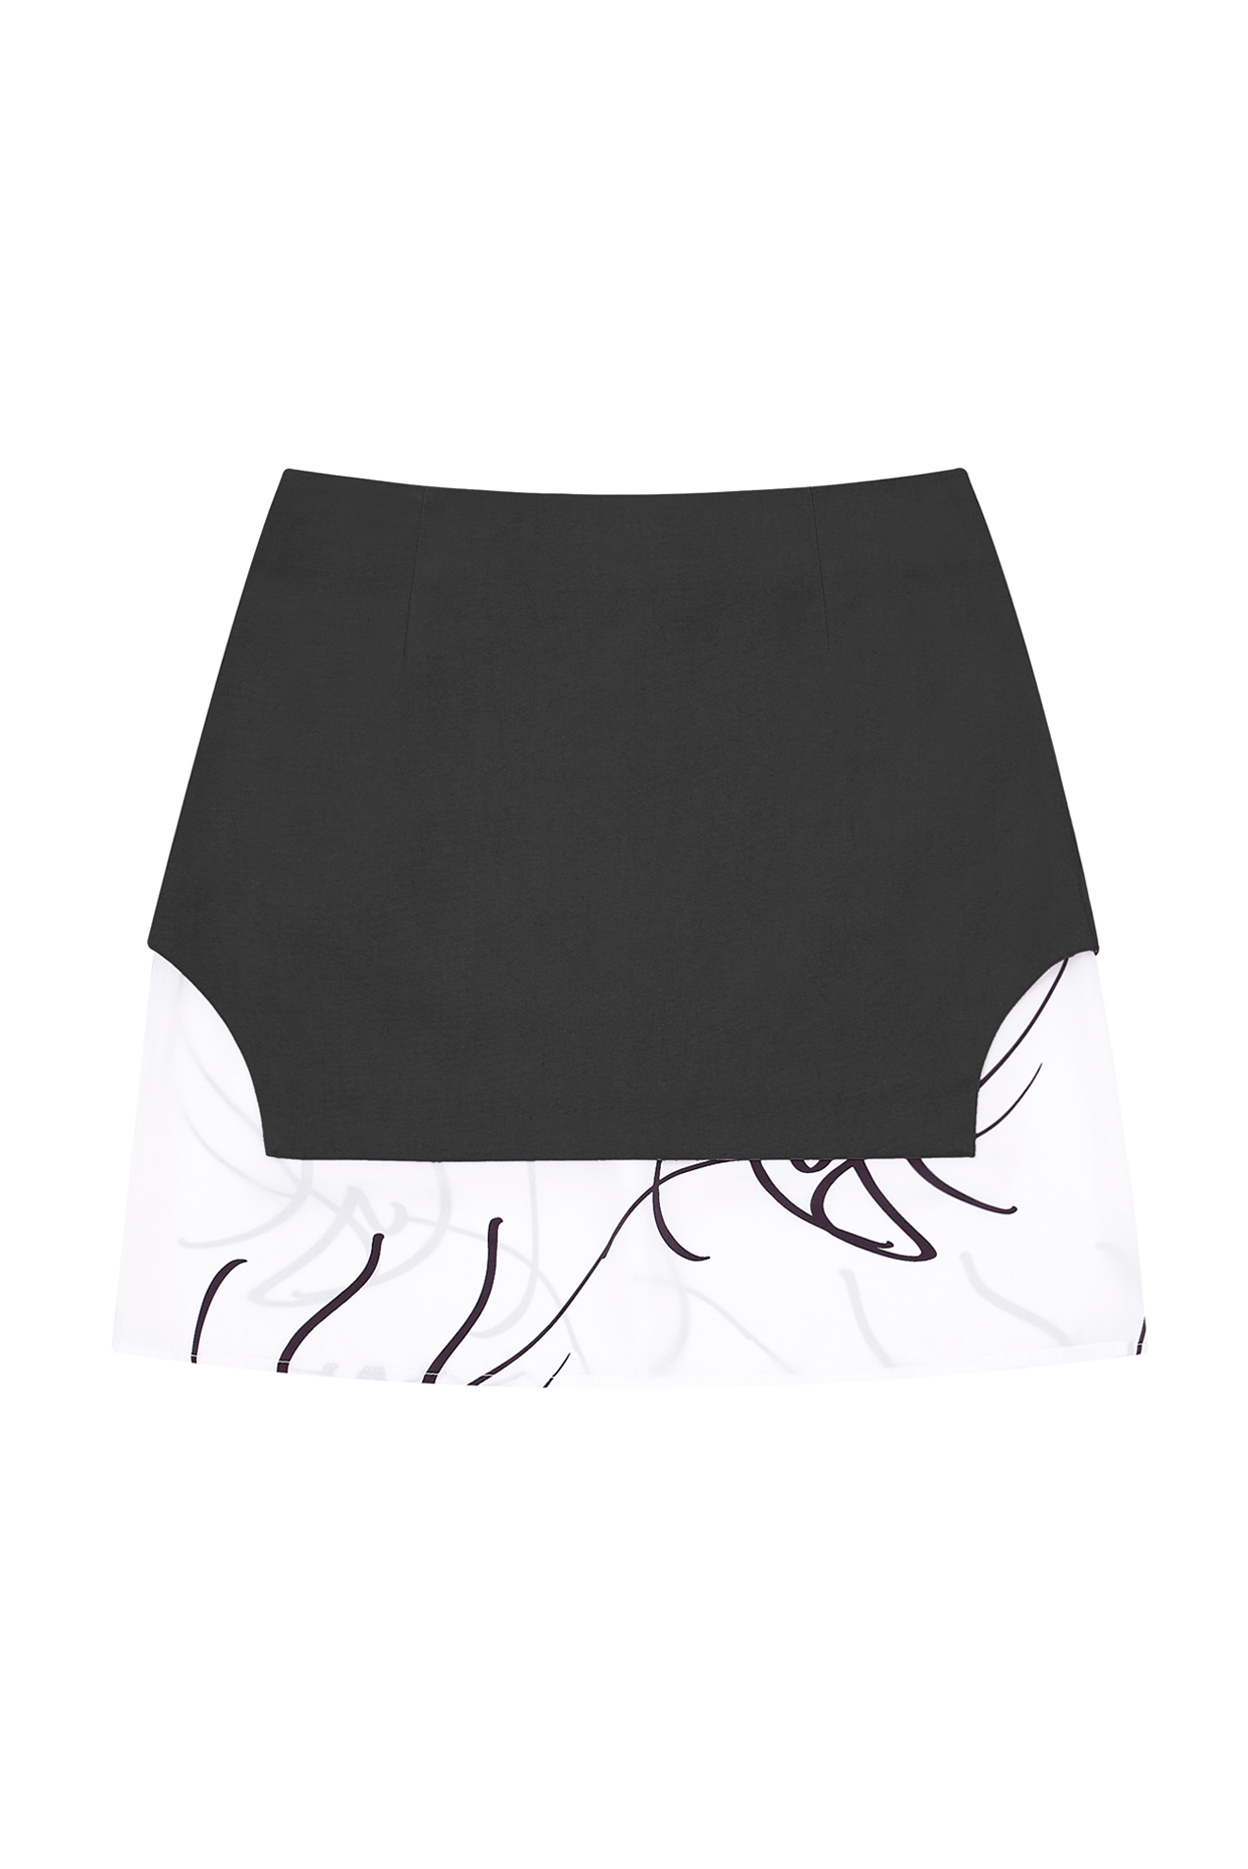 SATIN TUNIC SKIRT-black, 혜영킴, HYEYEONG KIM designer brand